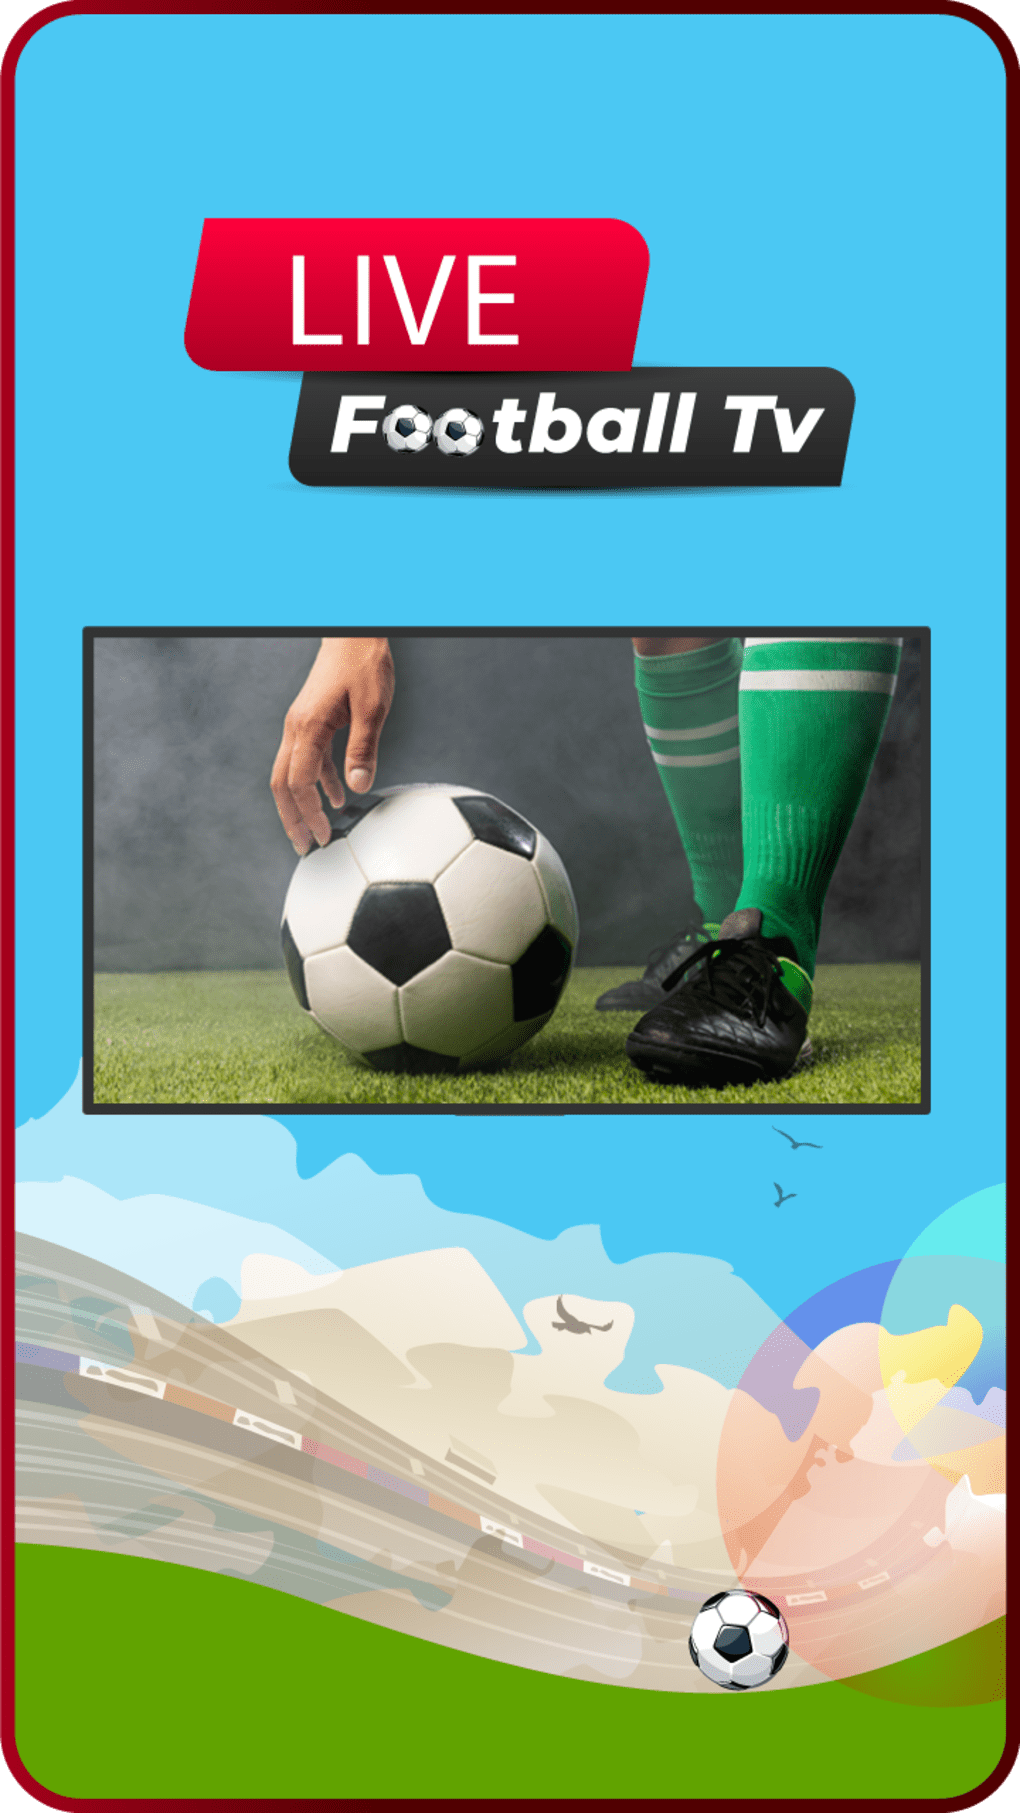 live football streaming app free